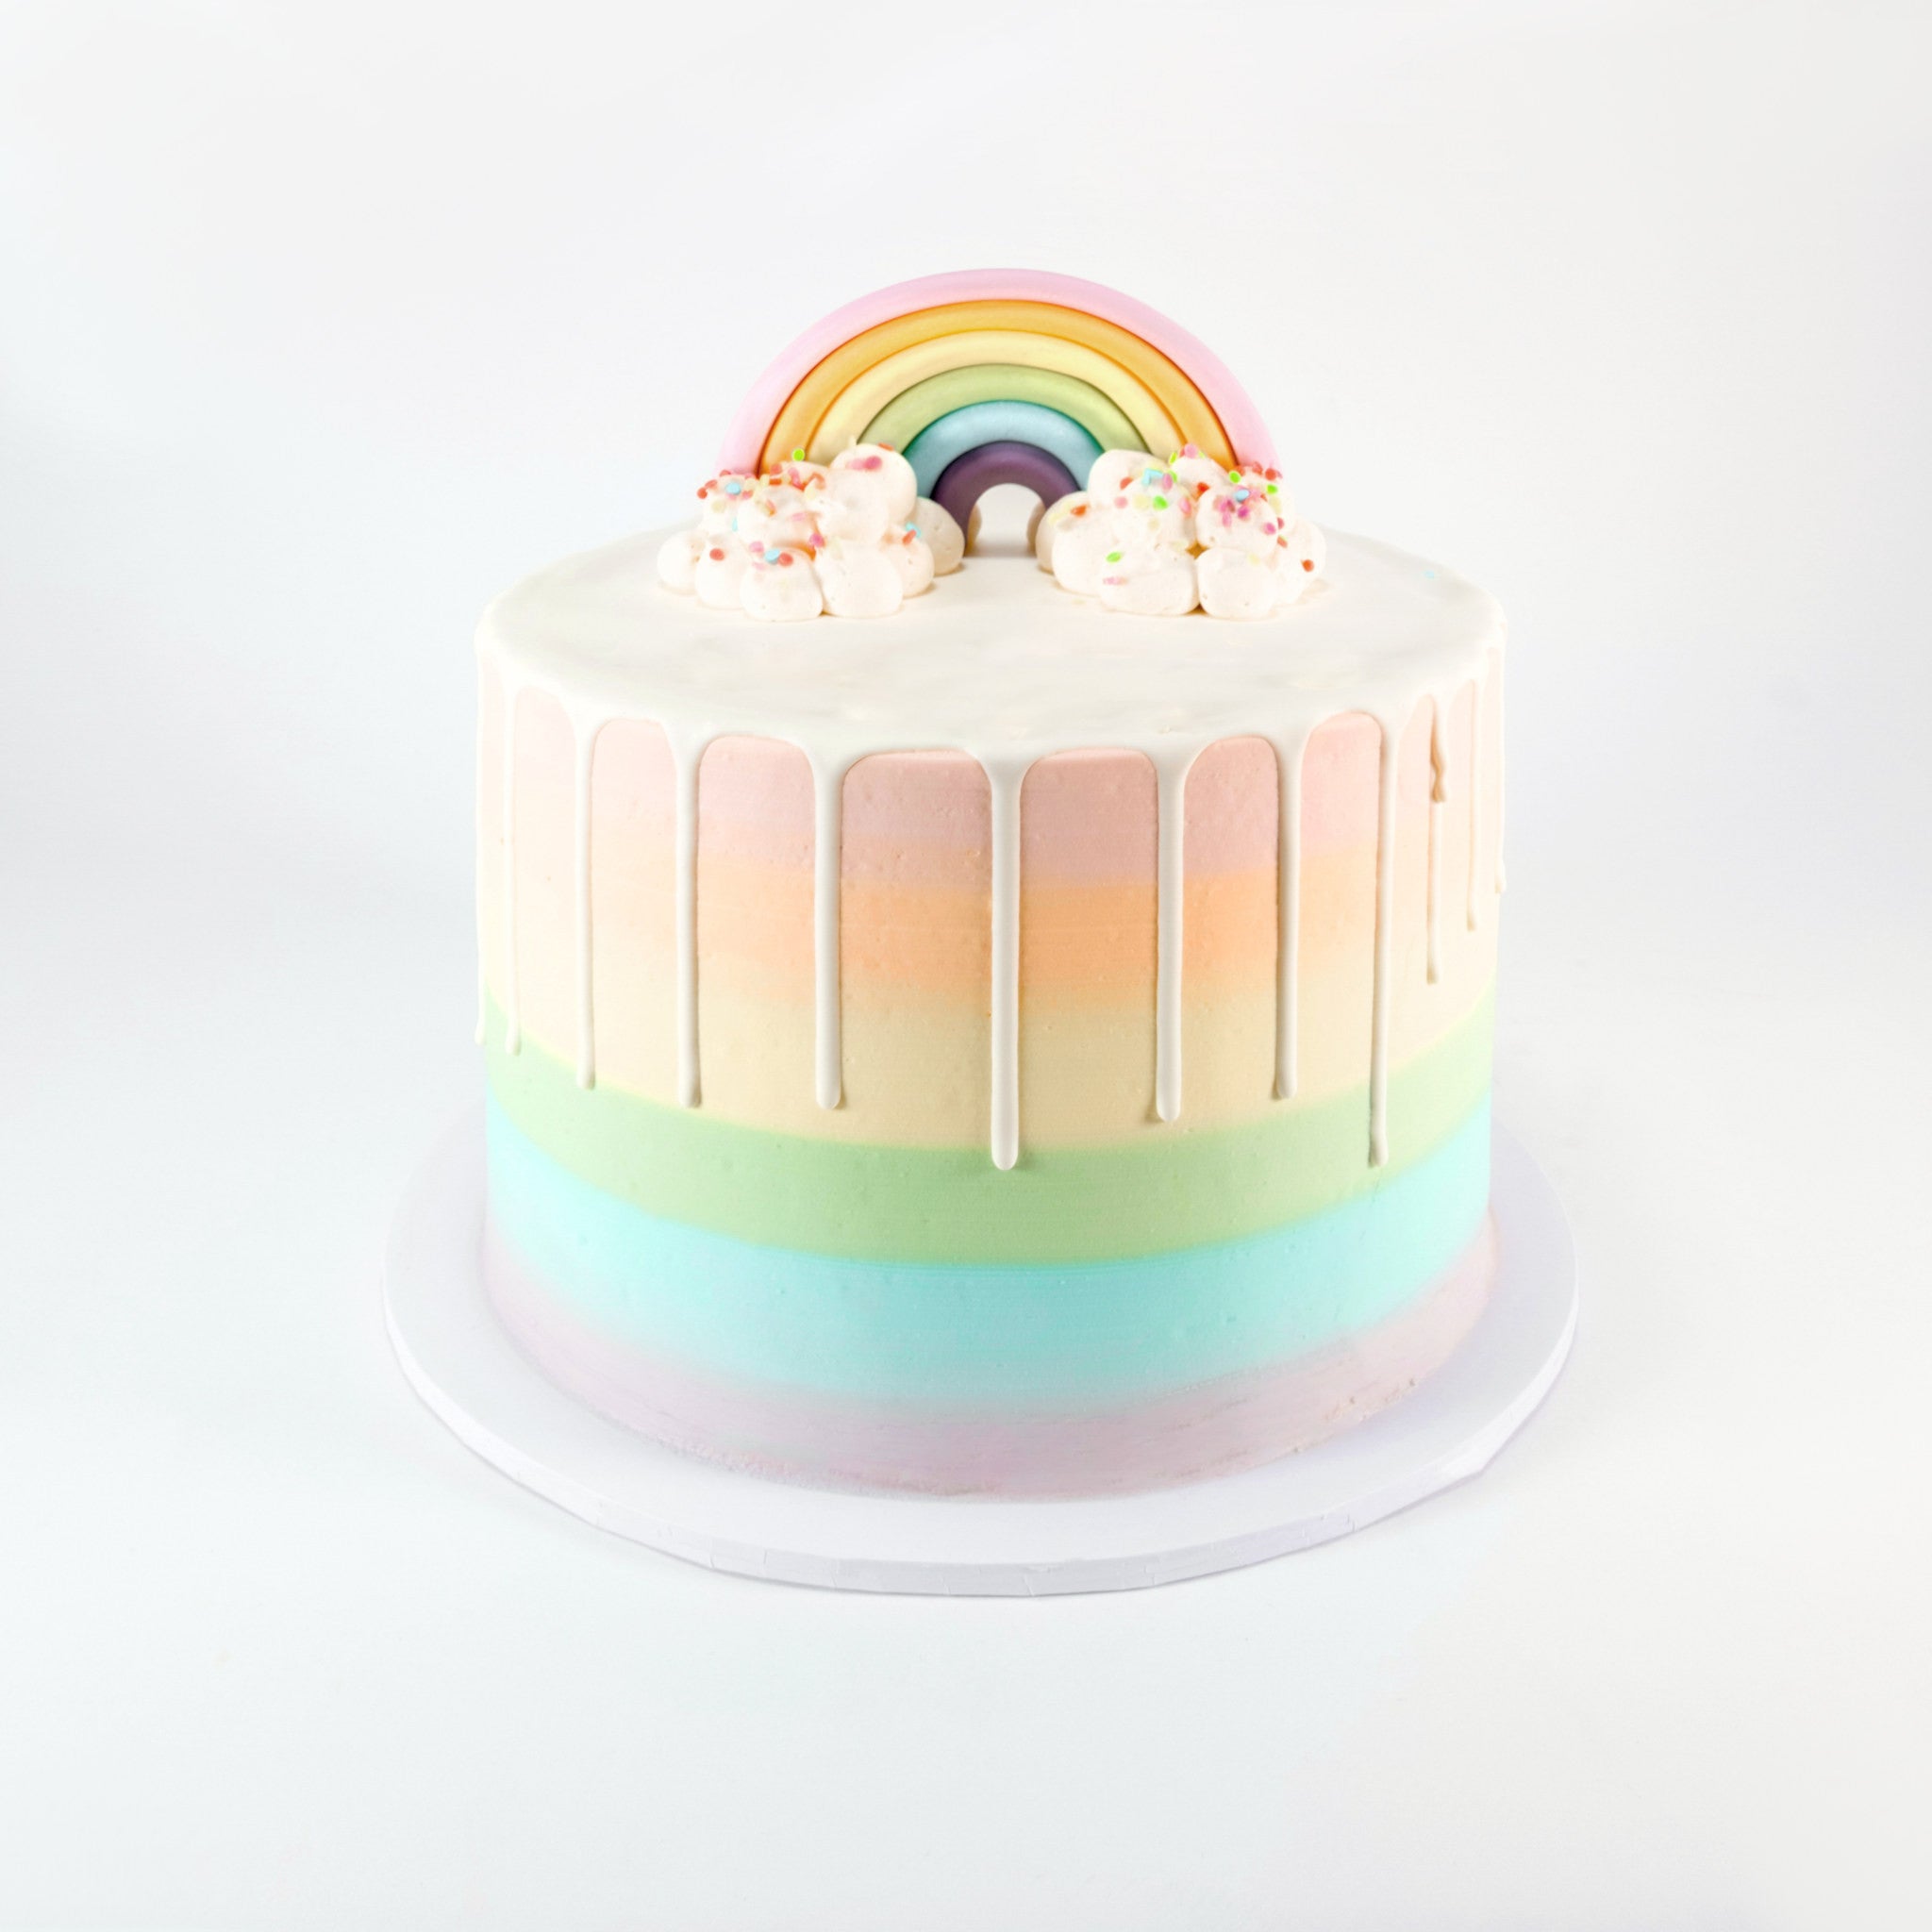 Handmade Rainbow Cake Delivery in Sussex | Harry Batten